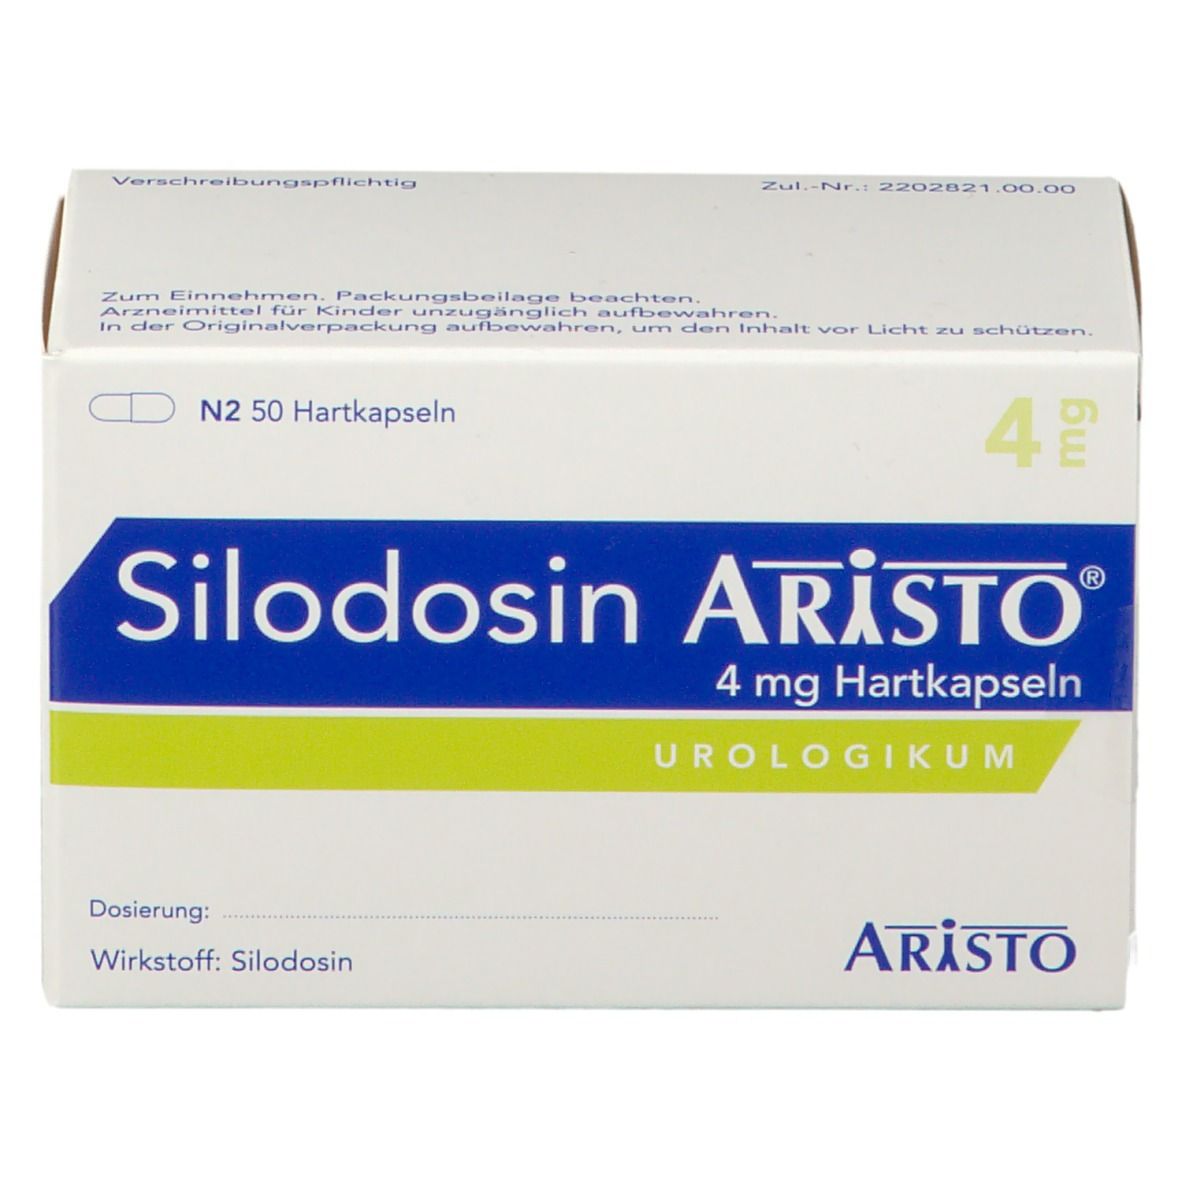 Silodosin Aristo® 4 mg